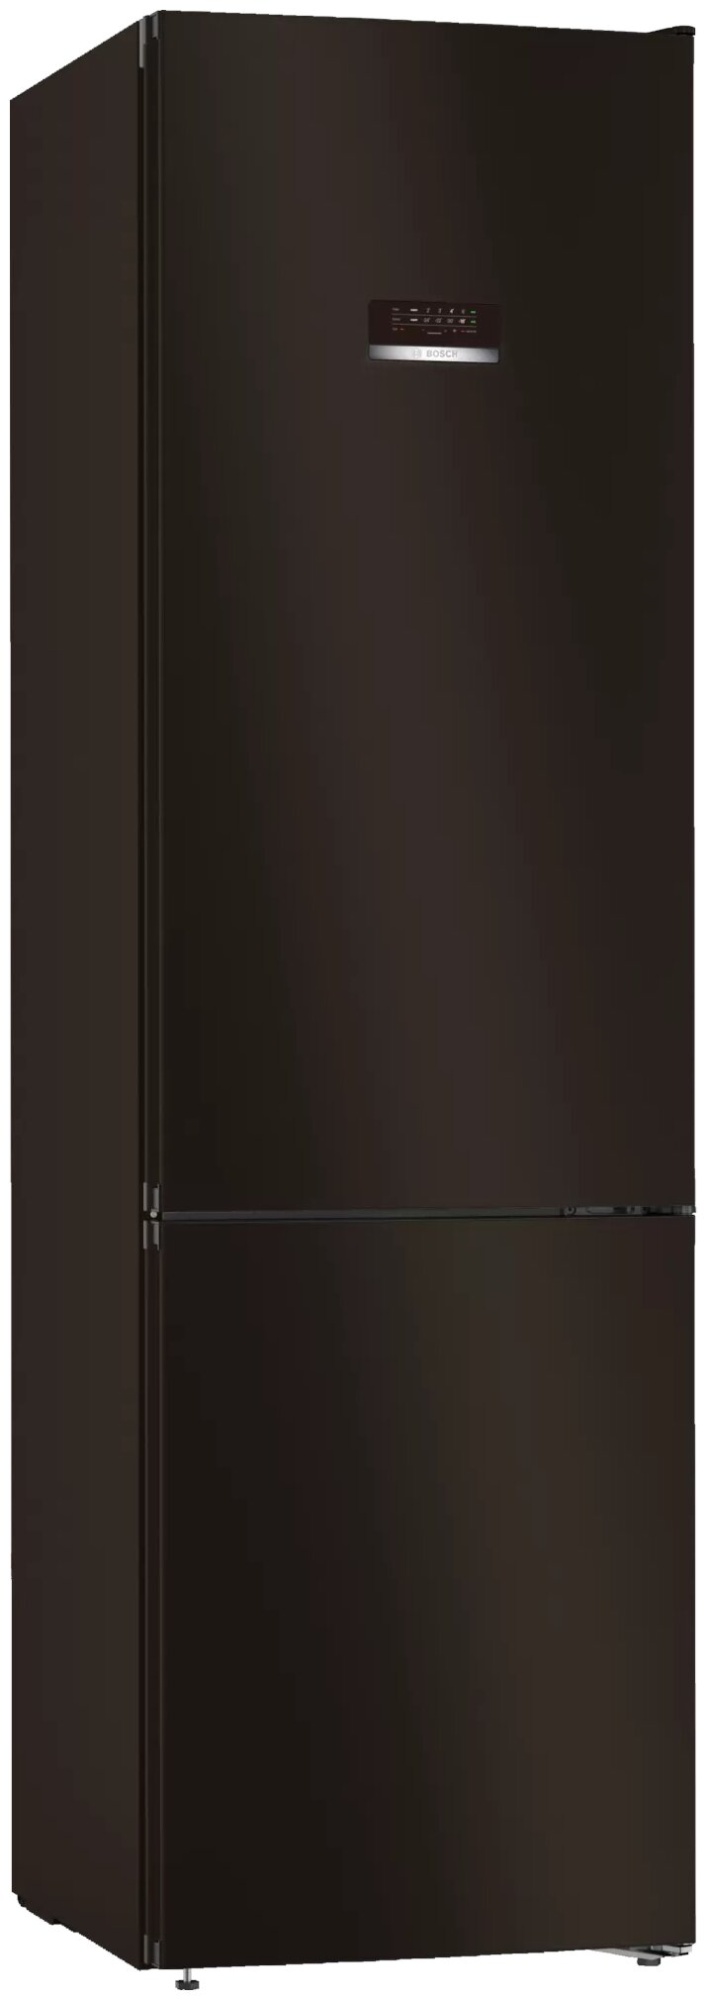 Xолодильник BOSCH KGN39XD20R, черный